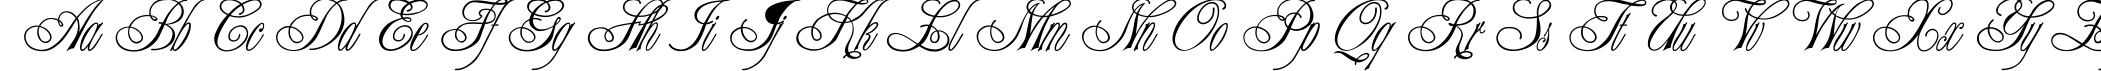 Пример написания английского алфавита шрифтом Champagne